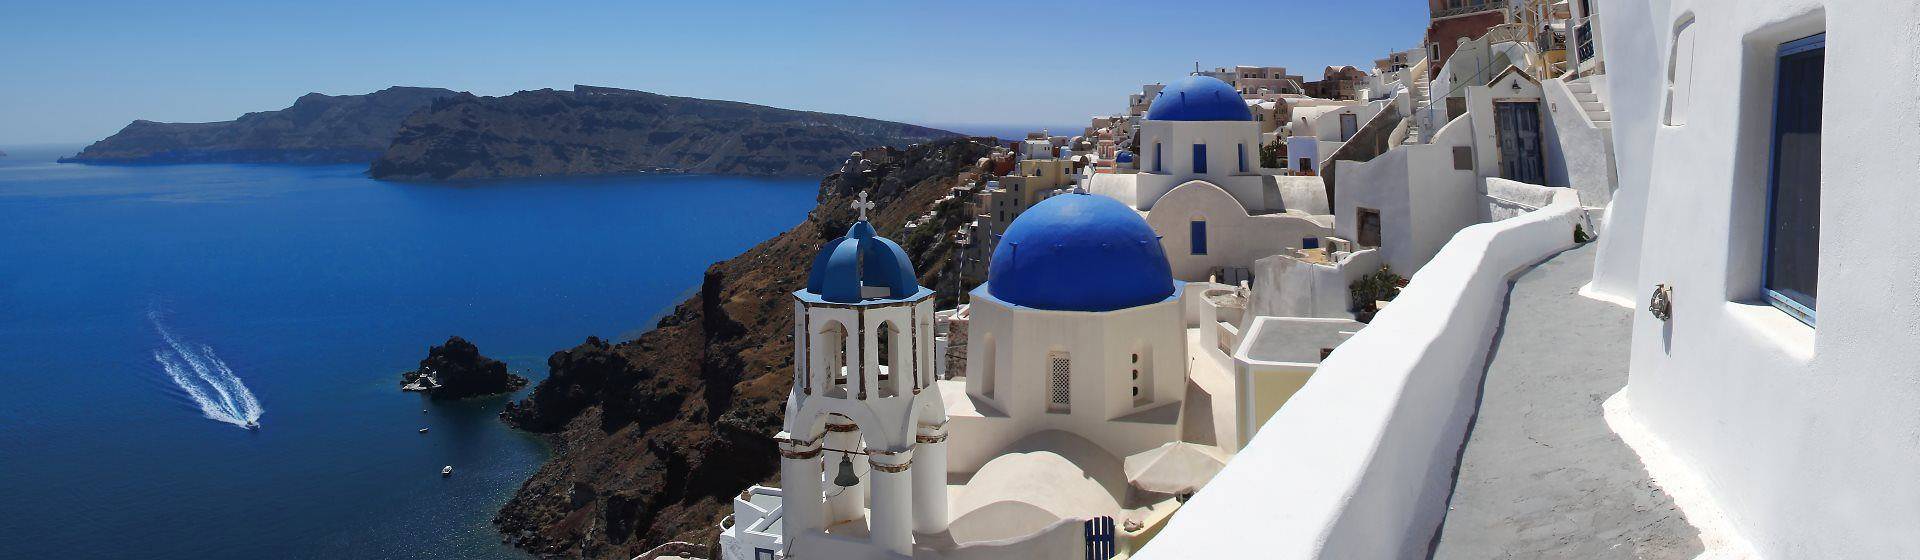 Holidays to Greek Islands Image